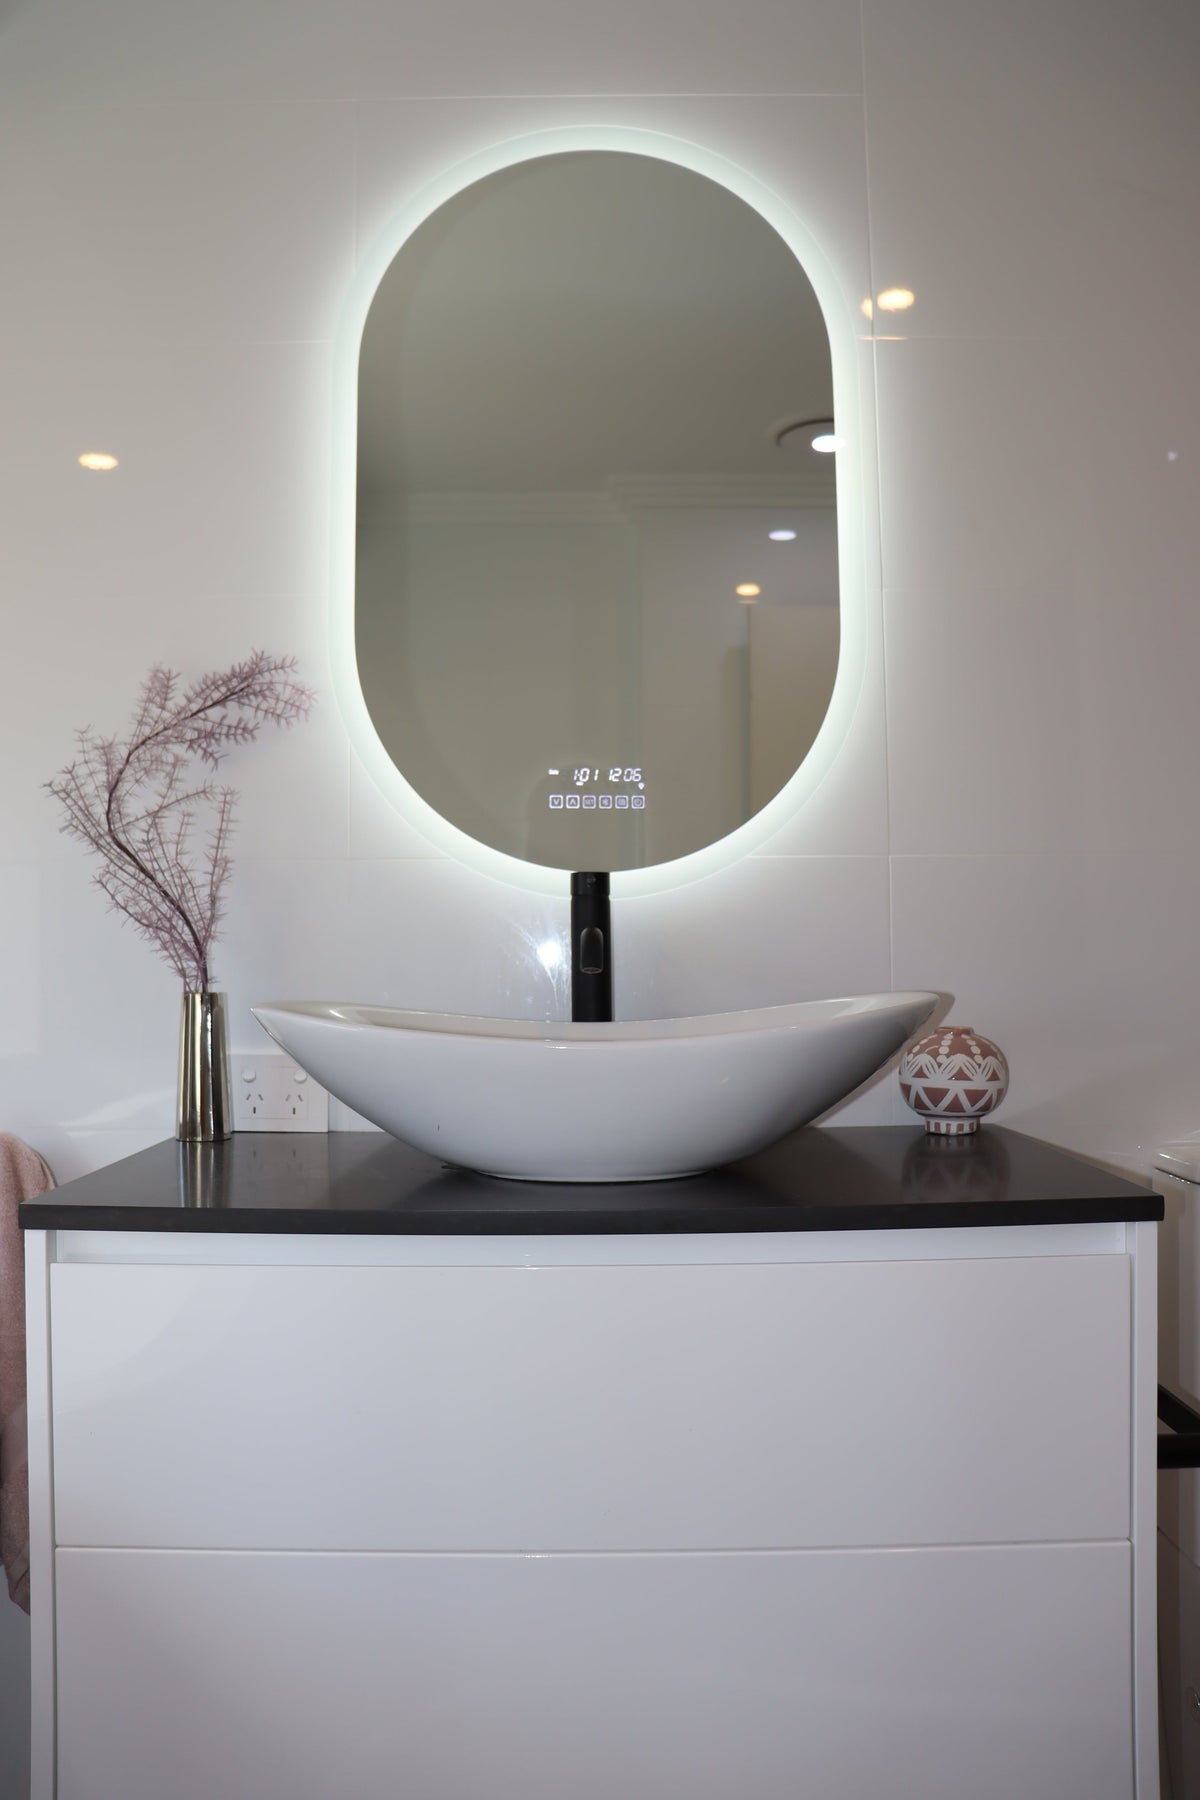 Pill-shaped Smart LED mirror radiating brilliant white backlit light in an all-white bathroom